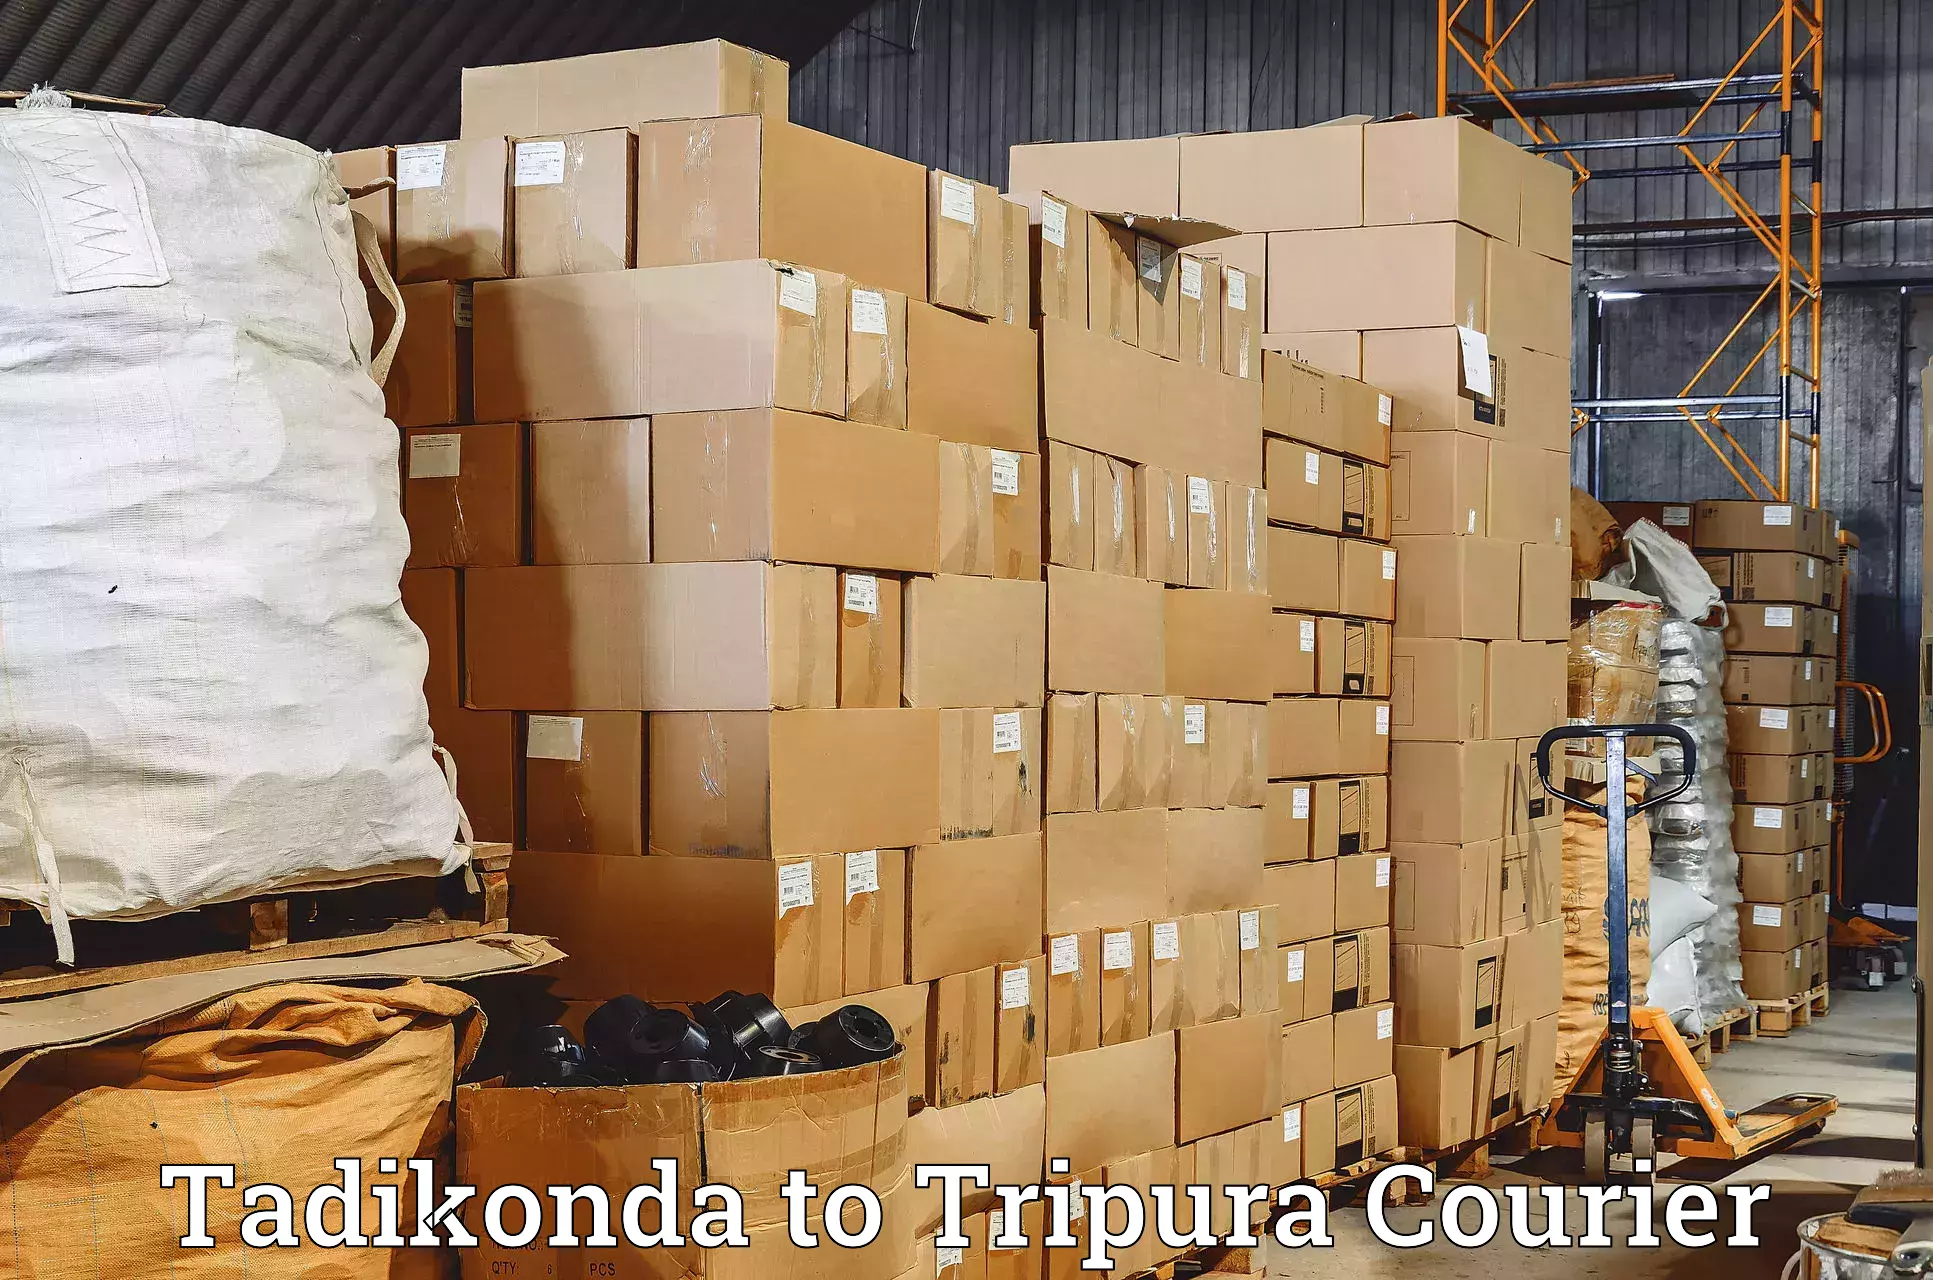 Express delivery network Tadikonda to Udaipur Tripura